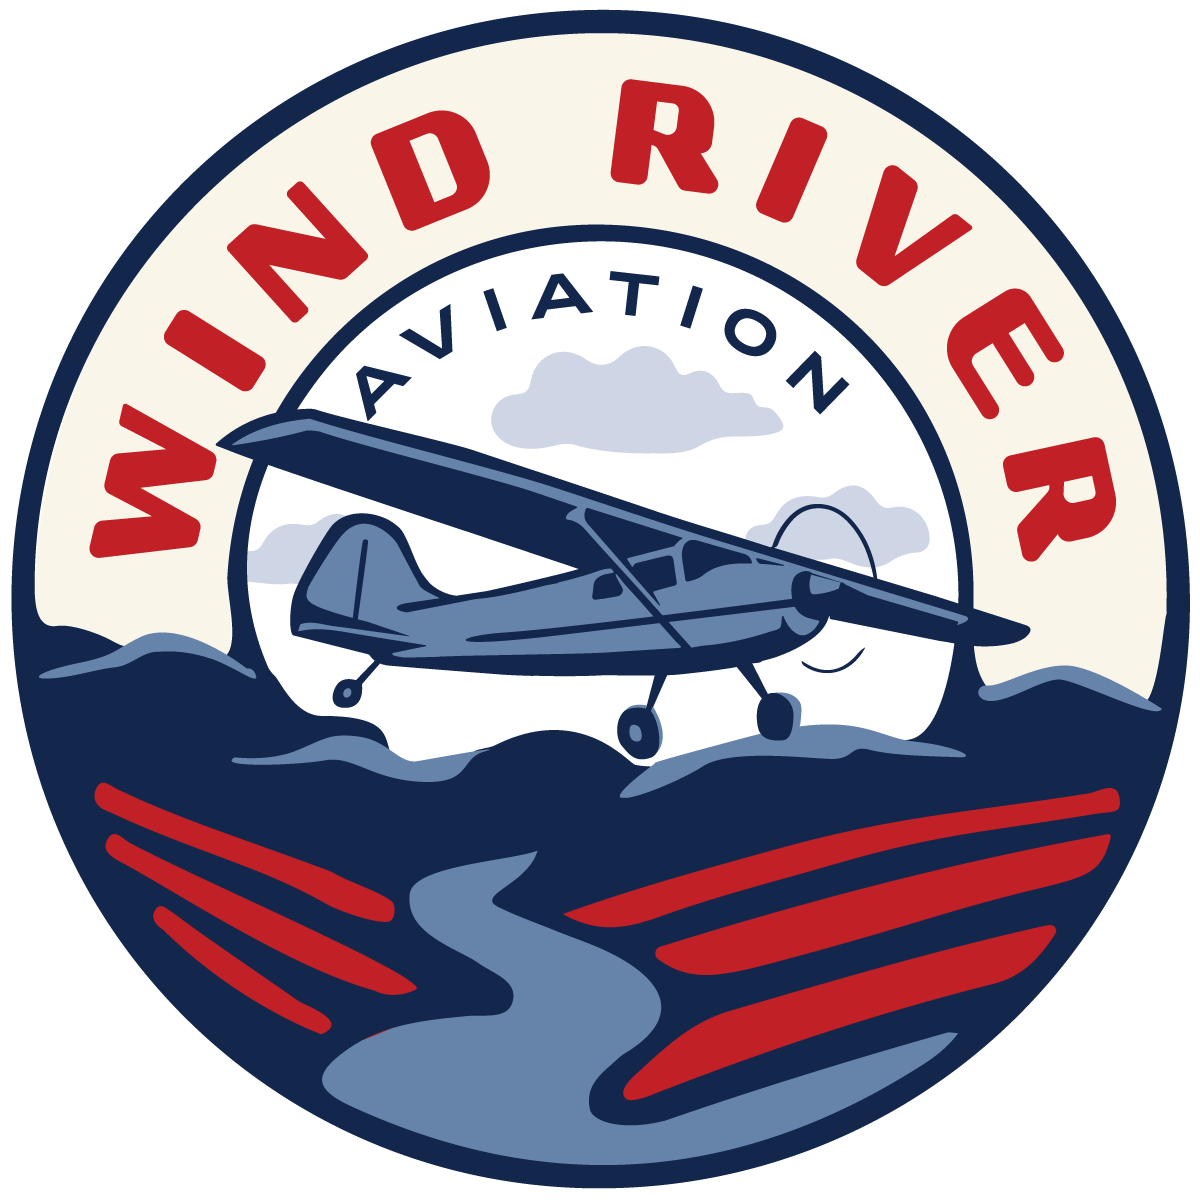 Wind River Aviation